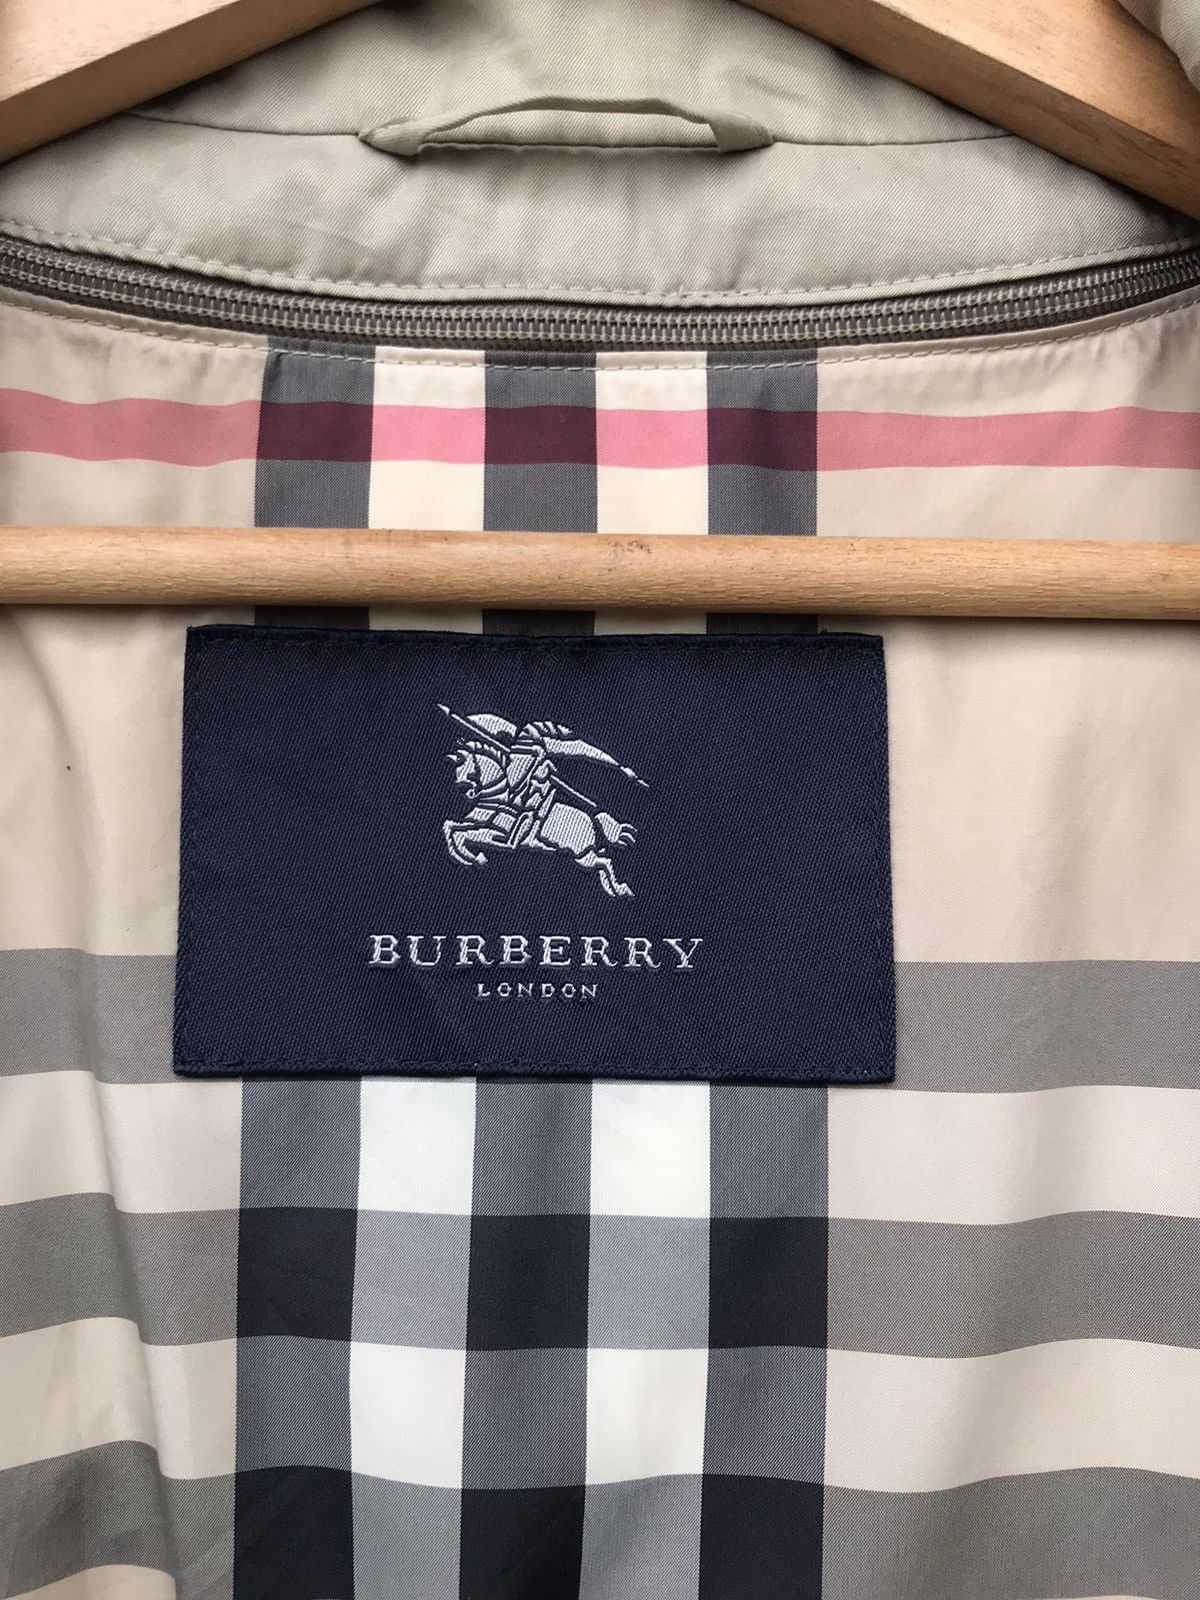 🛒Sent Offer🛒 Burberry London Nova Check Jacket - 3